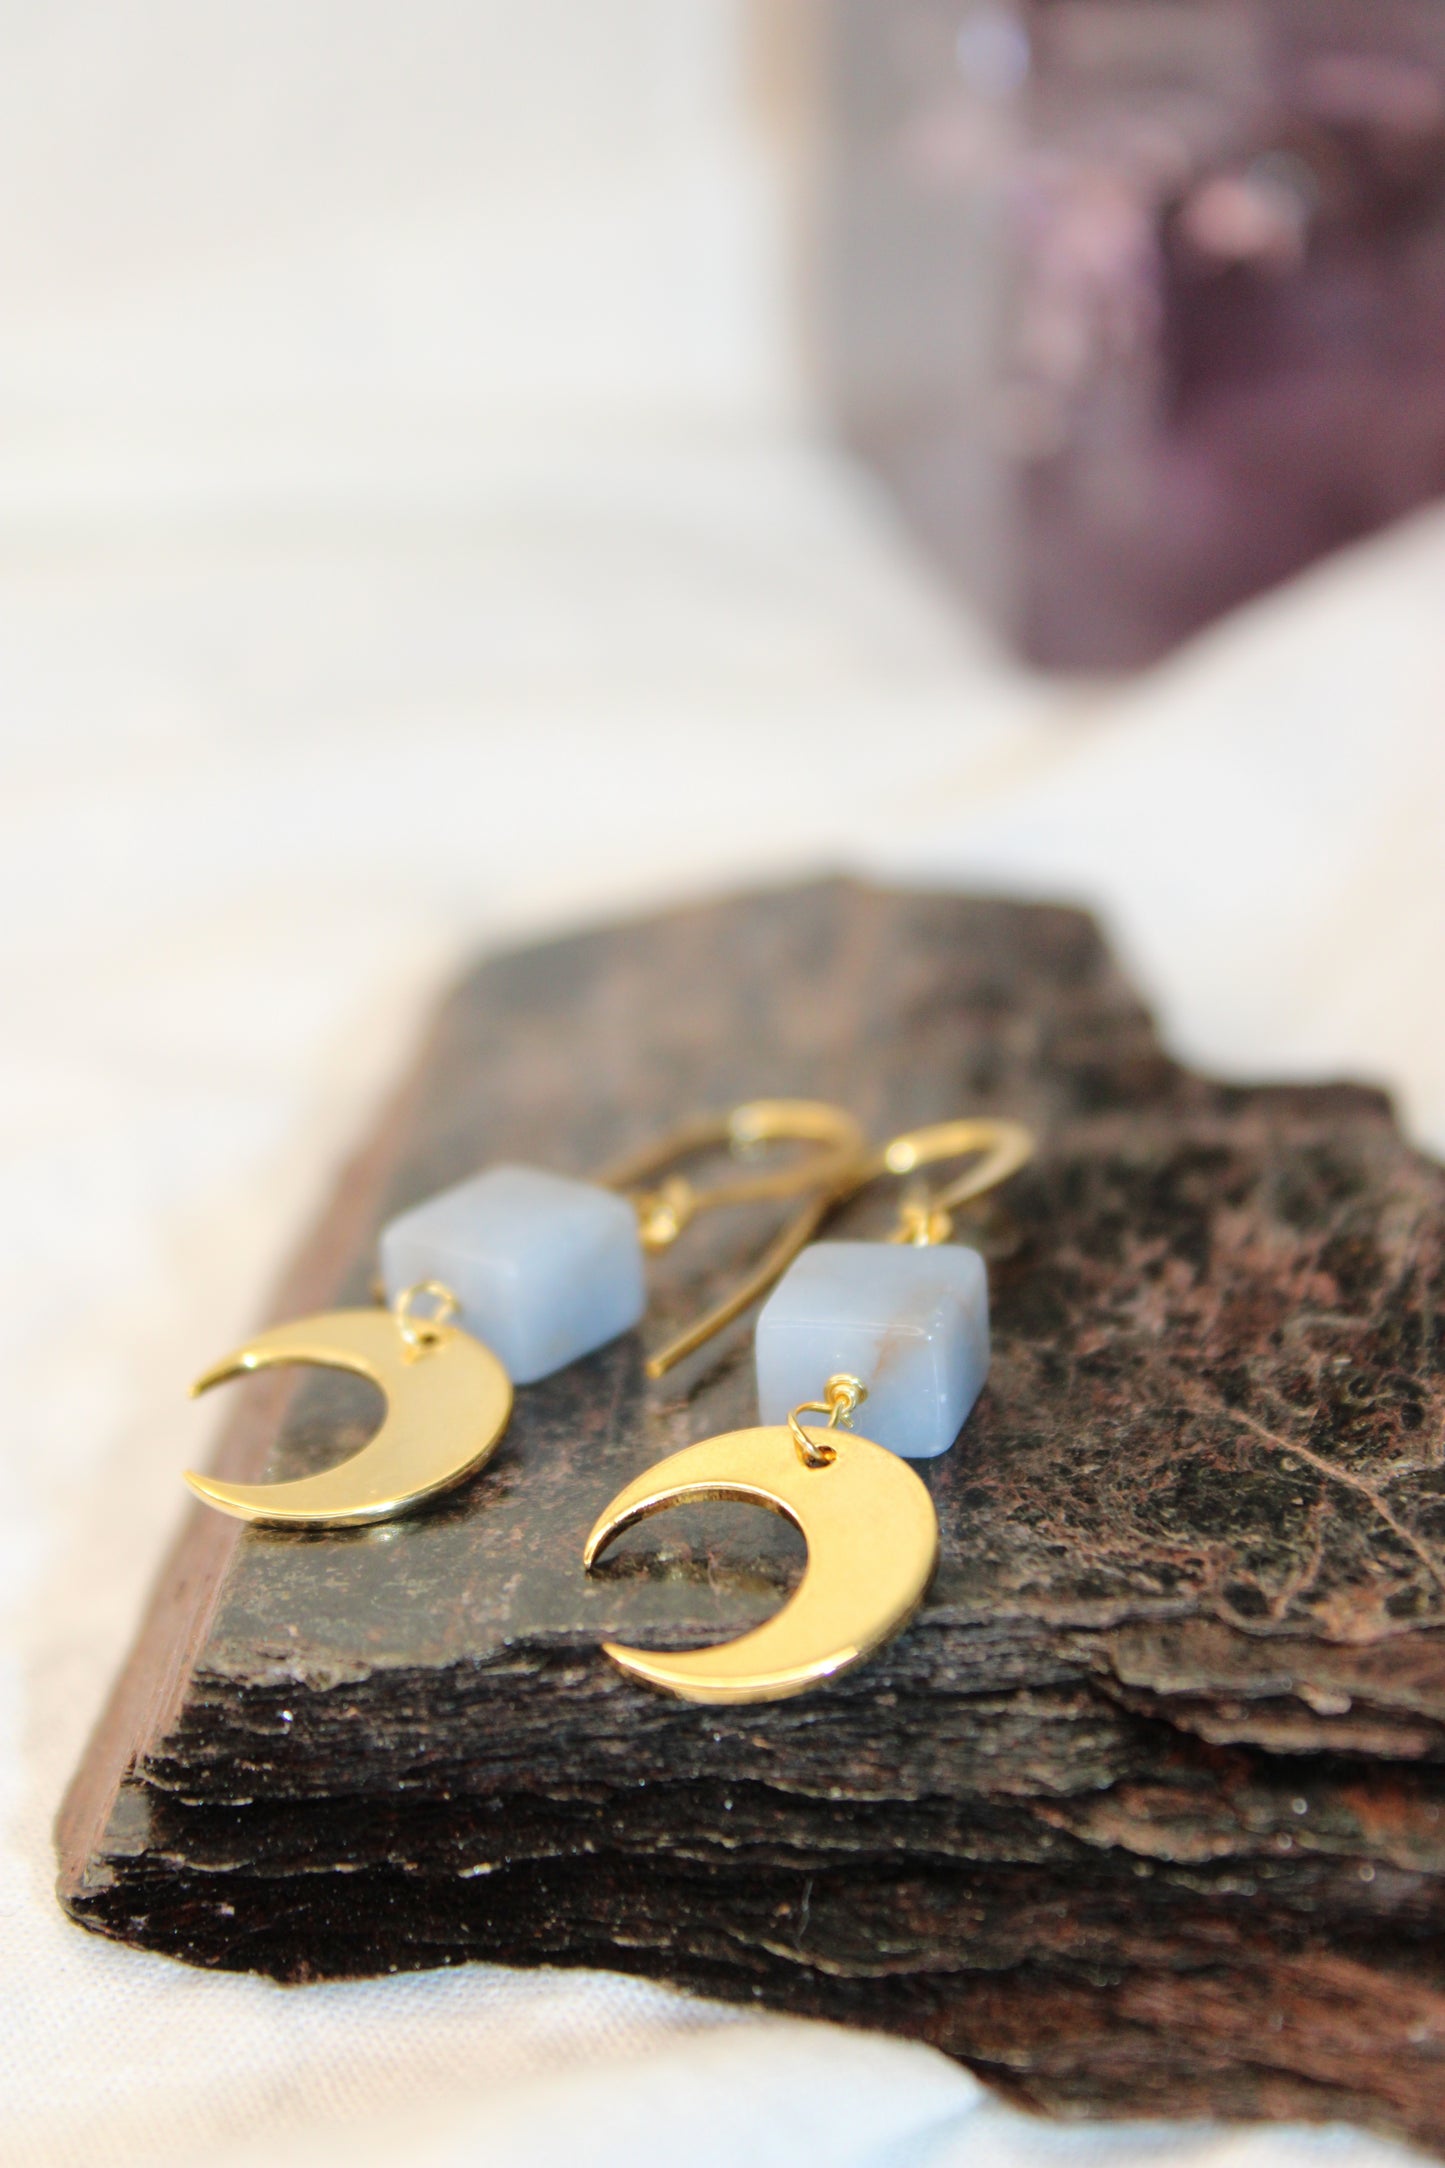 Crescent Moon Angelite Brass Gold Earrings